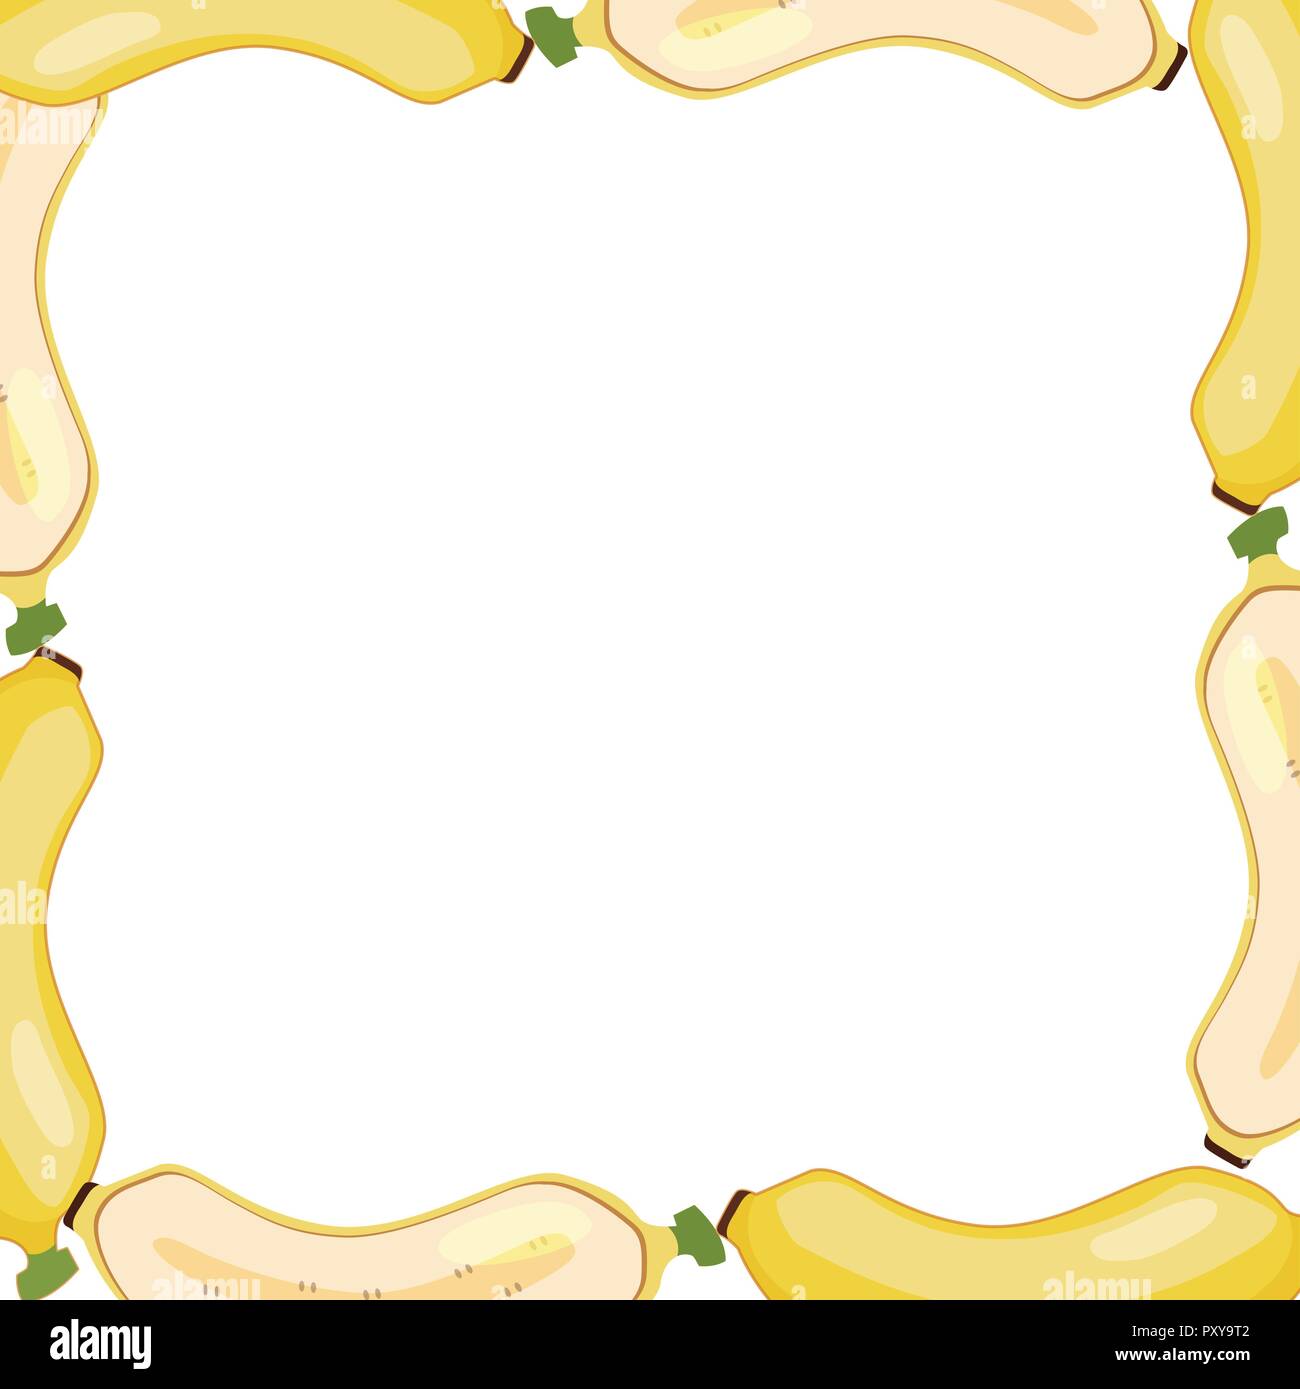 Banana Banner Fruits Label Background illustration Stock Vector Image ...